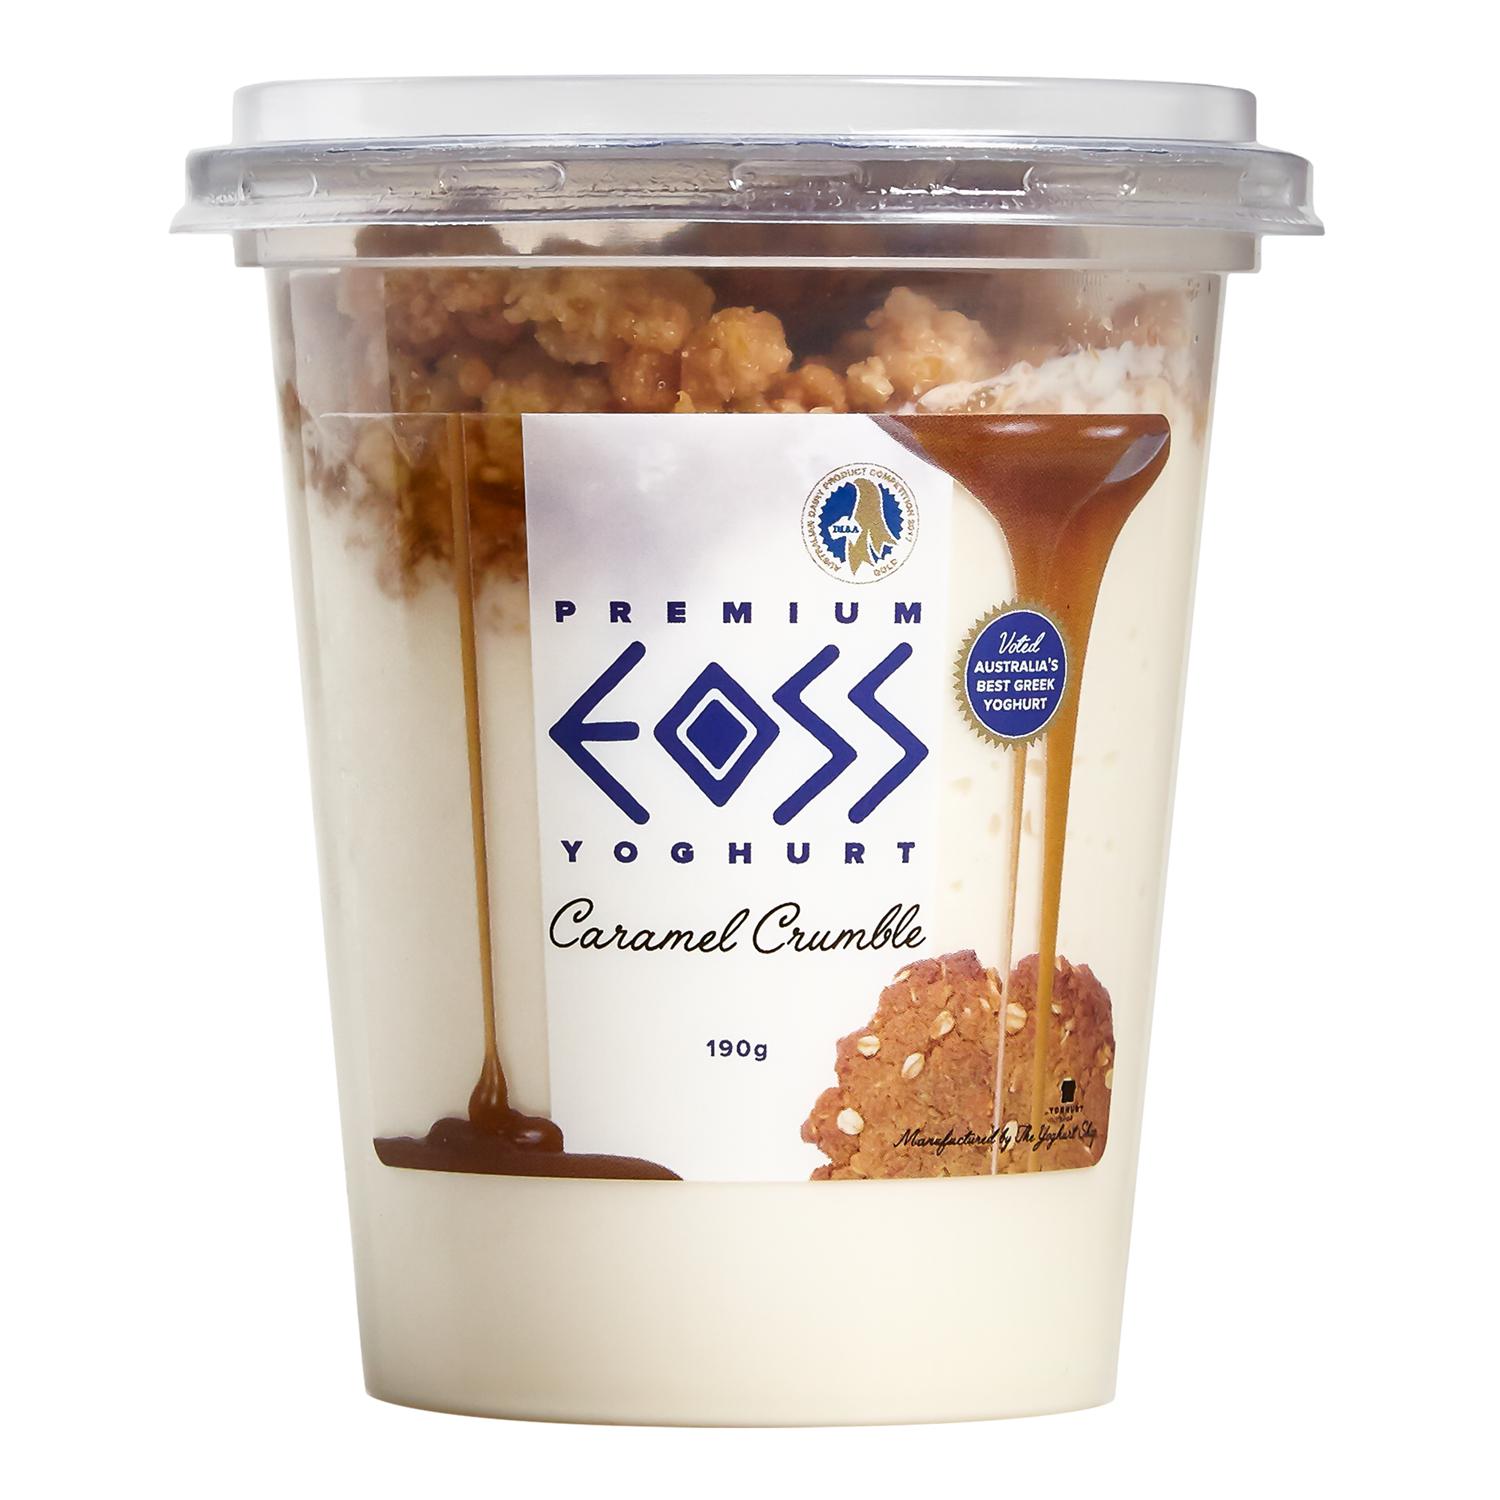 EOSS Yoghurt Caramel Crumble 190g